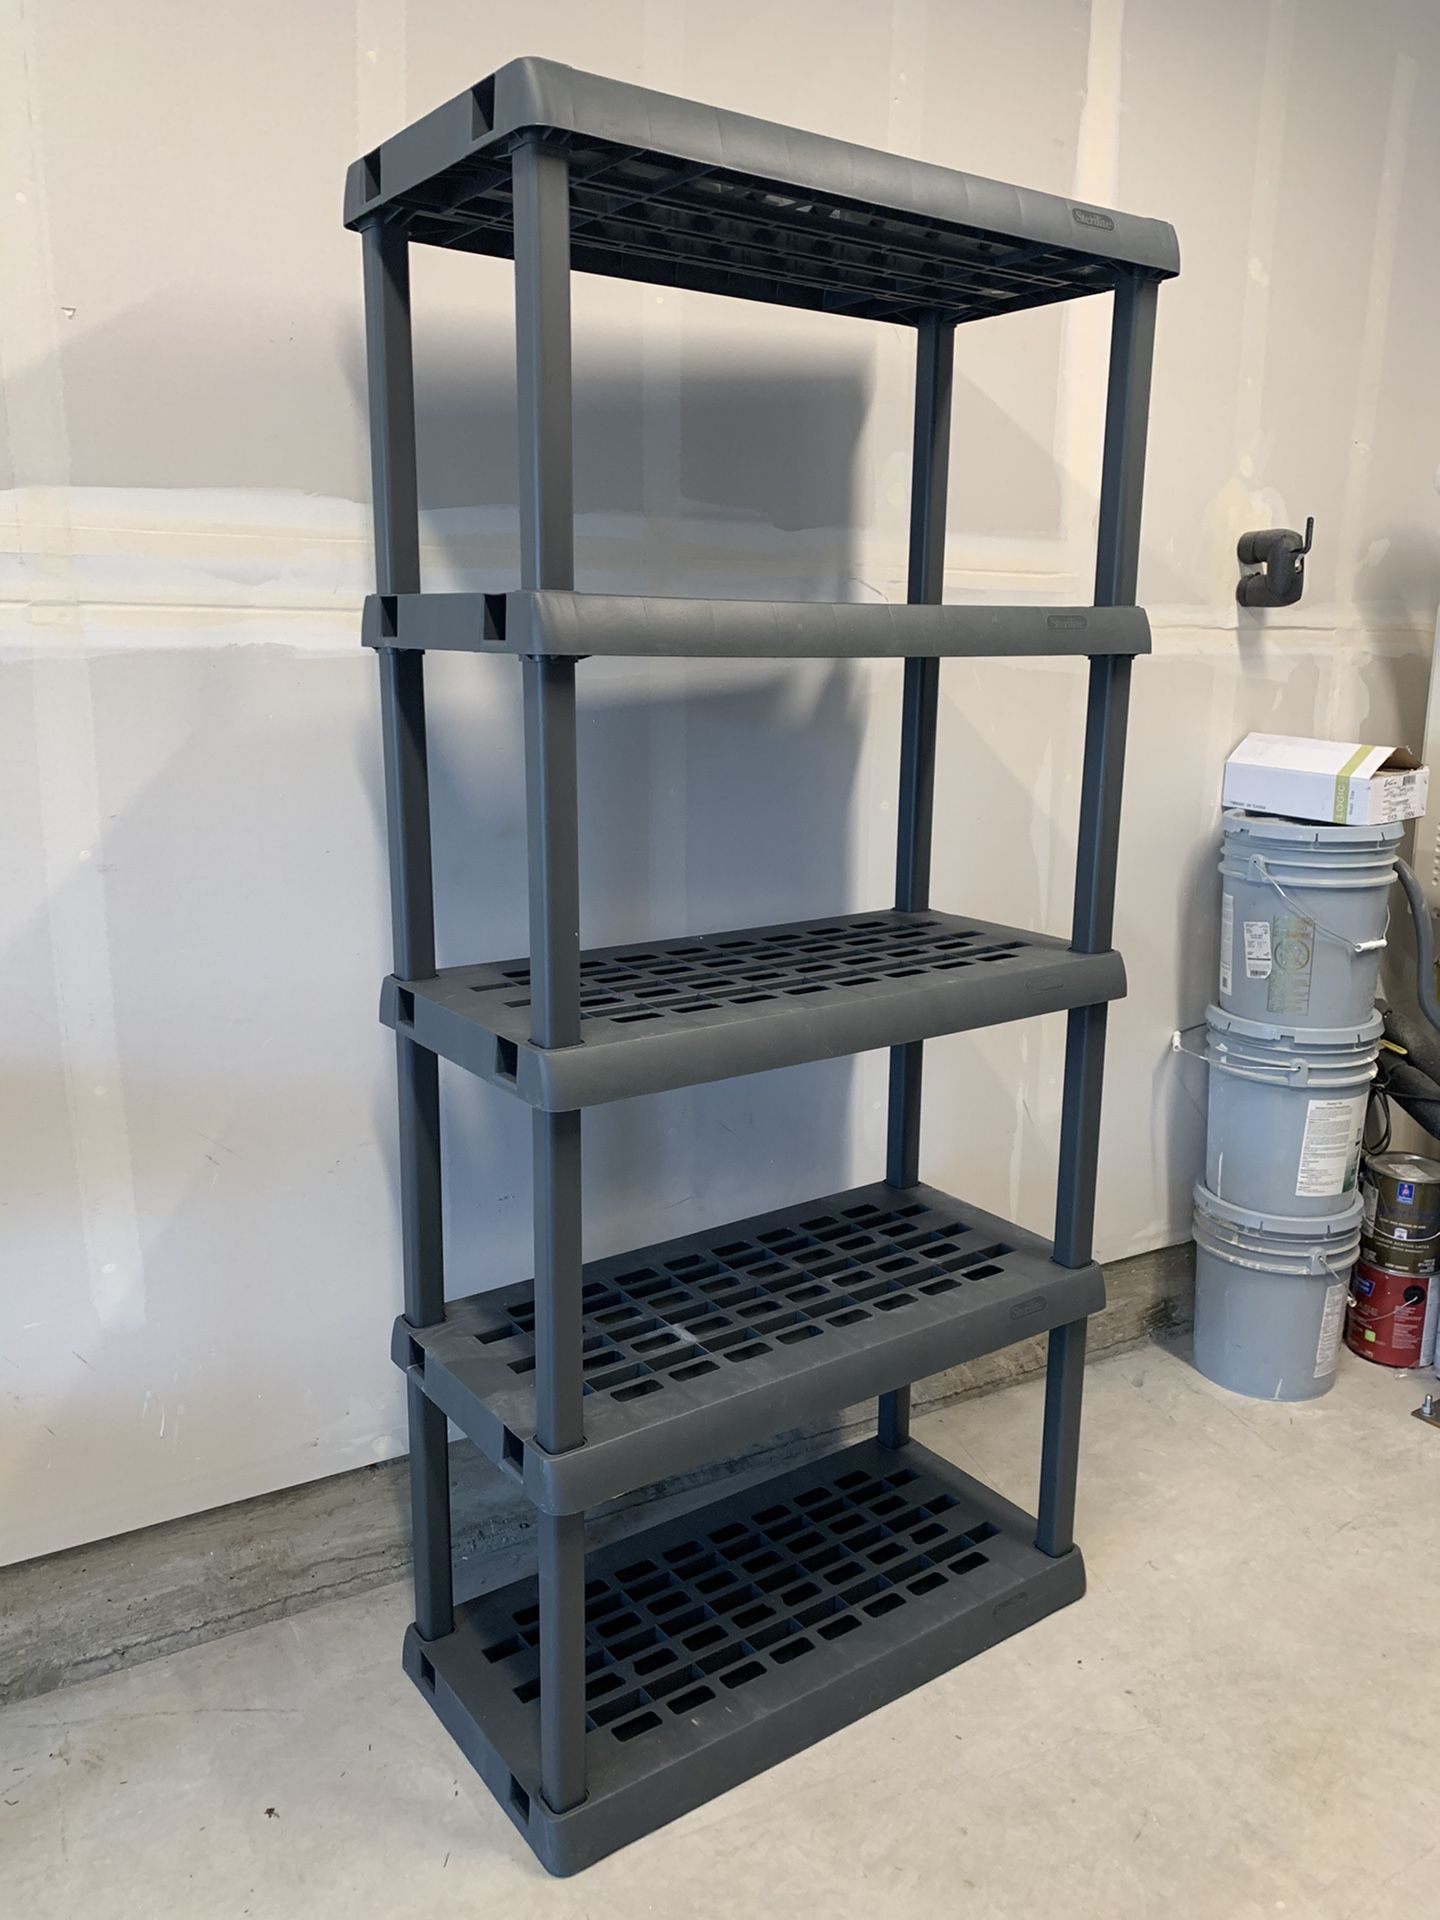 2 Utility shelves